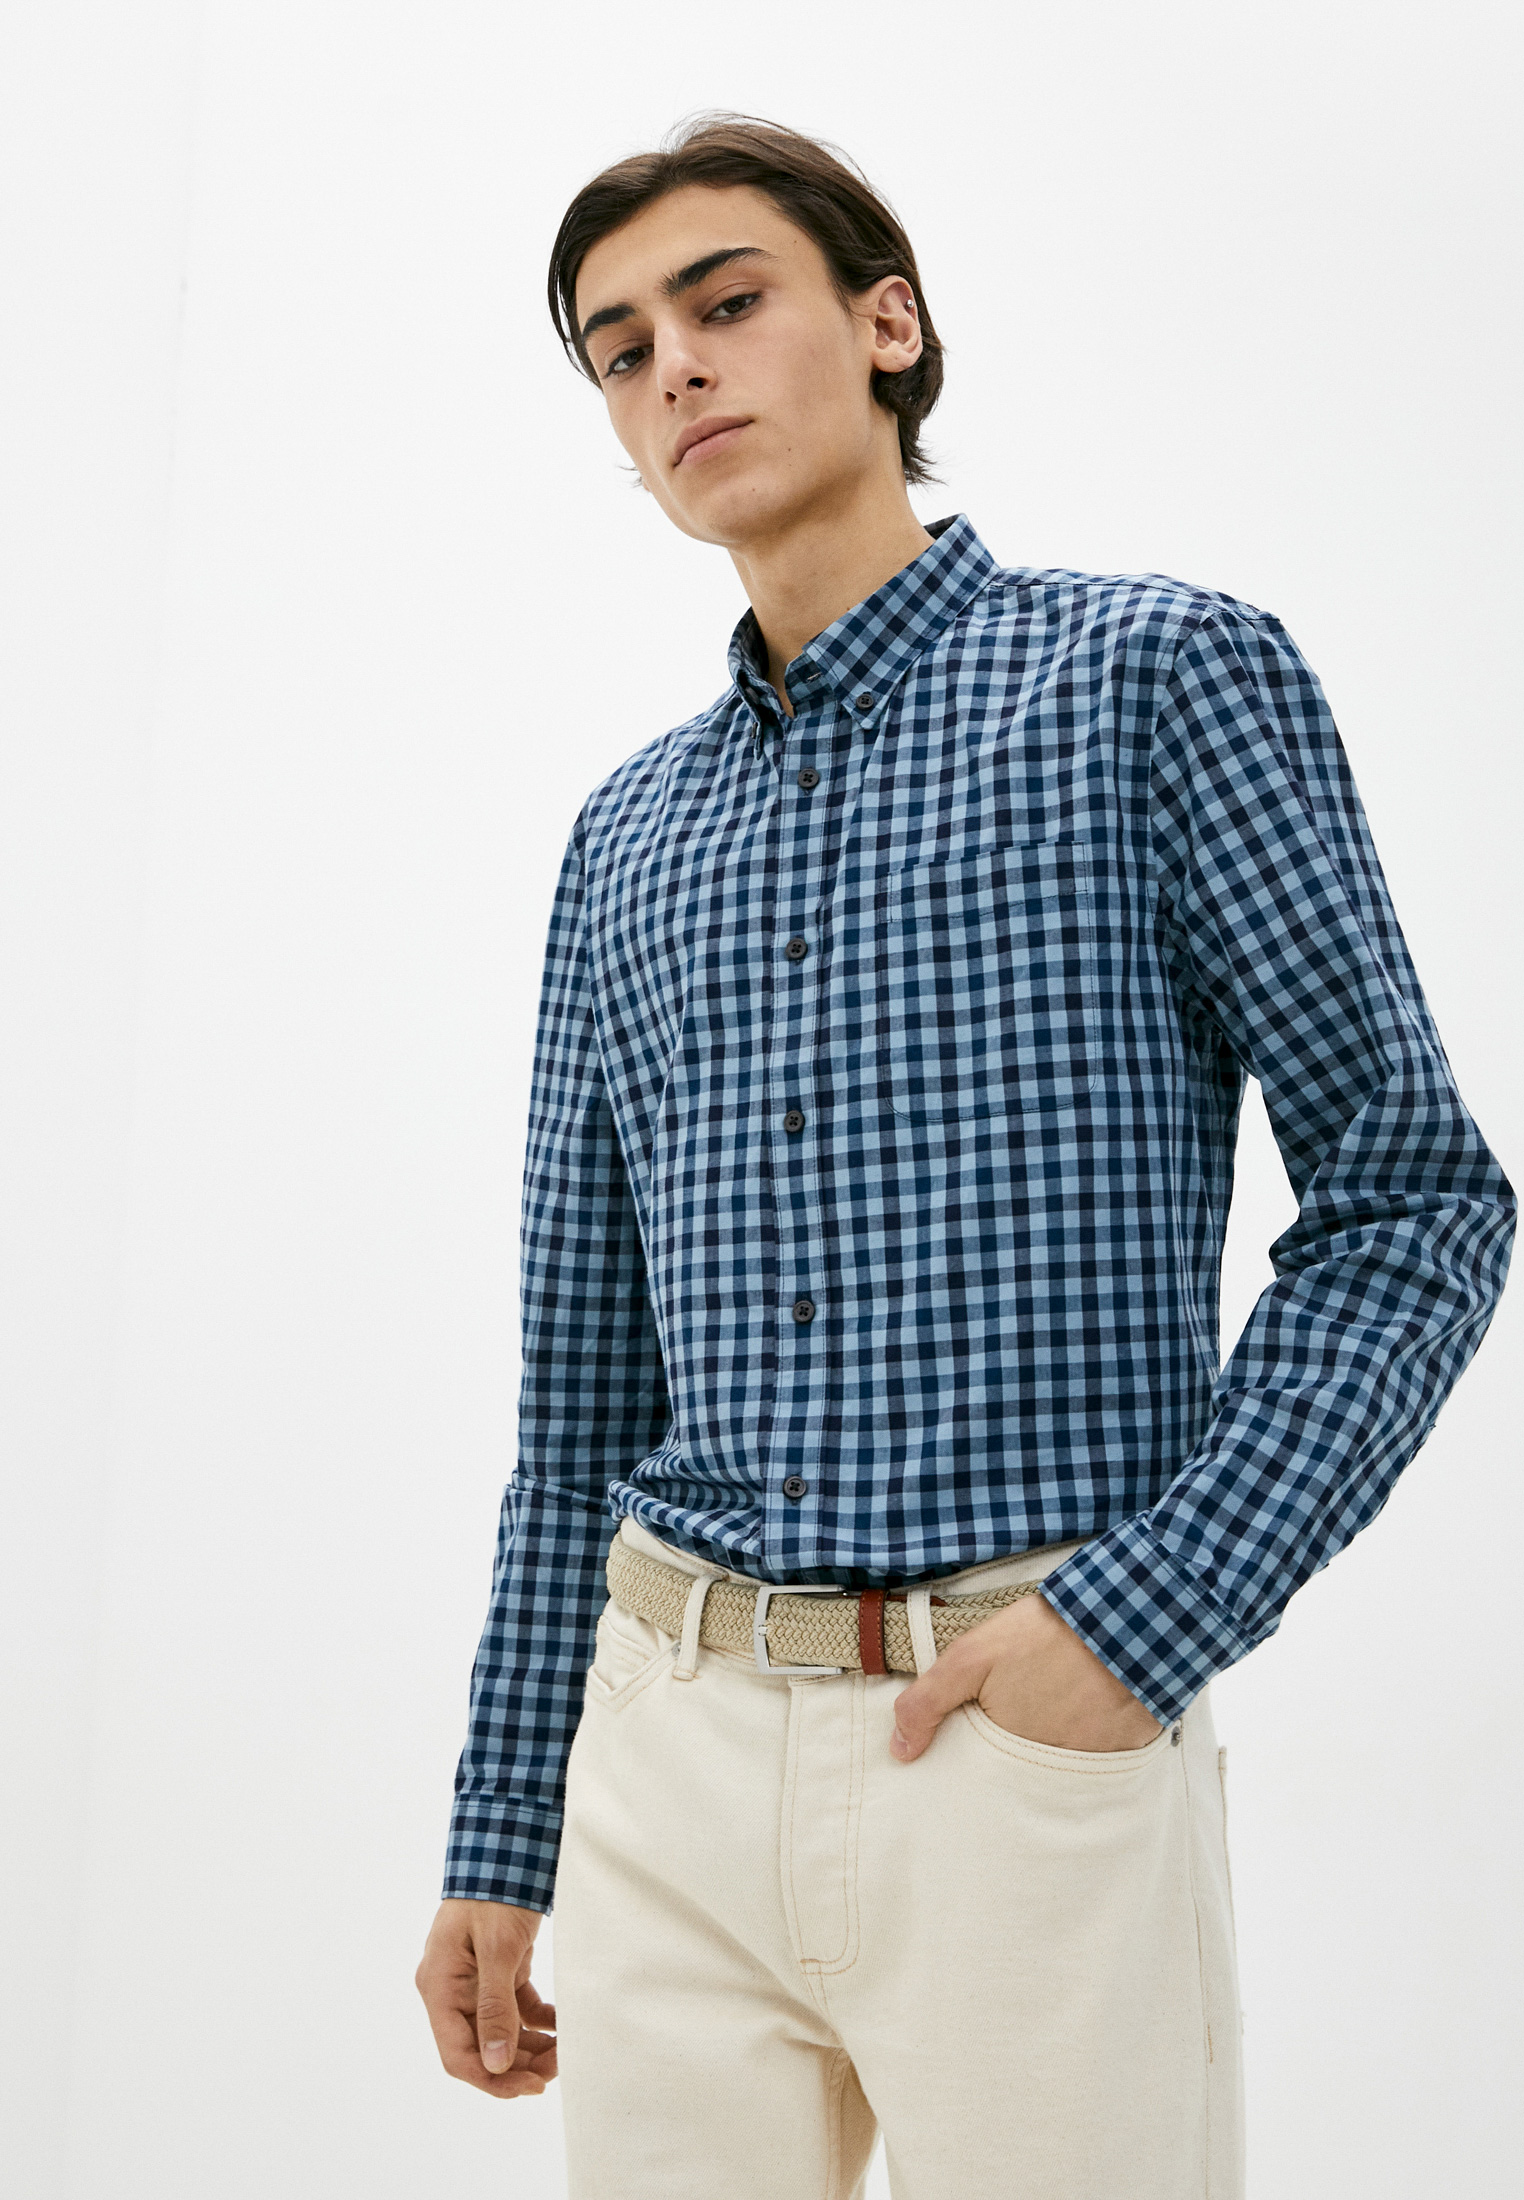 Рубашка Marks & Spencer, цвет: синий, RTLAAV495901 — купить в интернет-магазине Lamoda